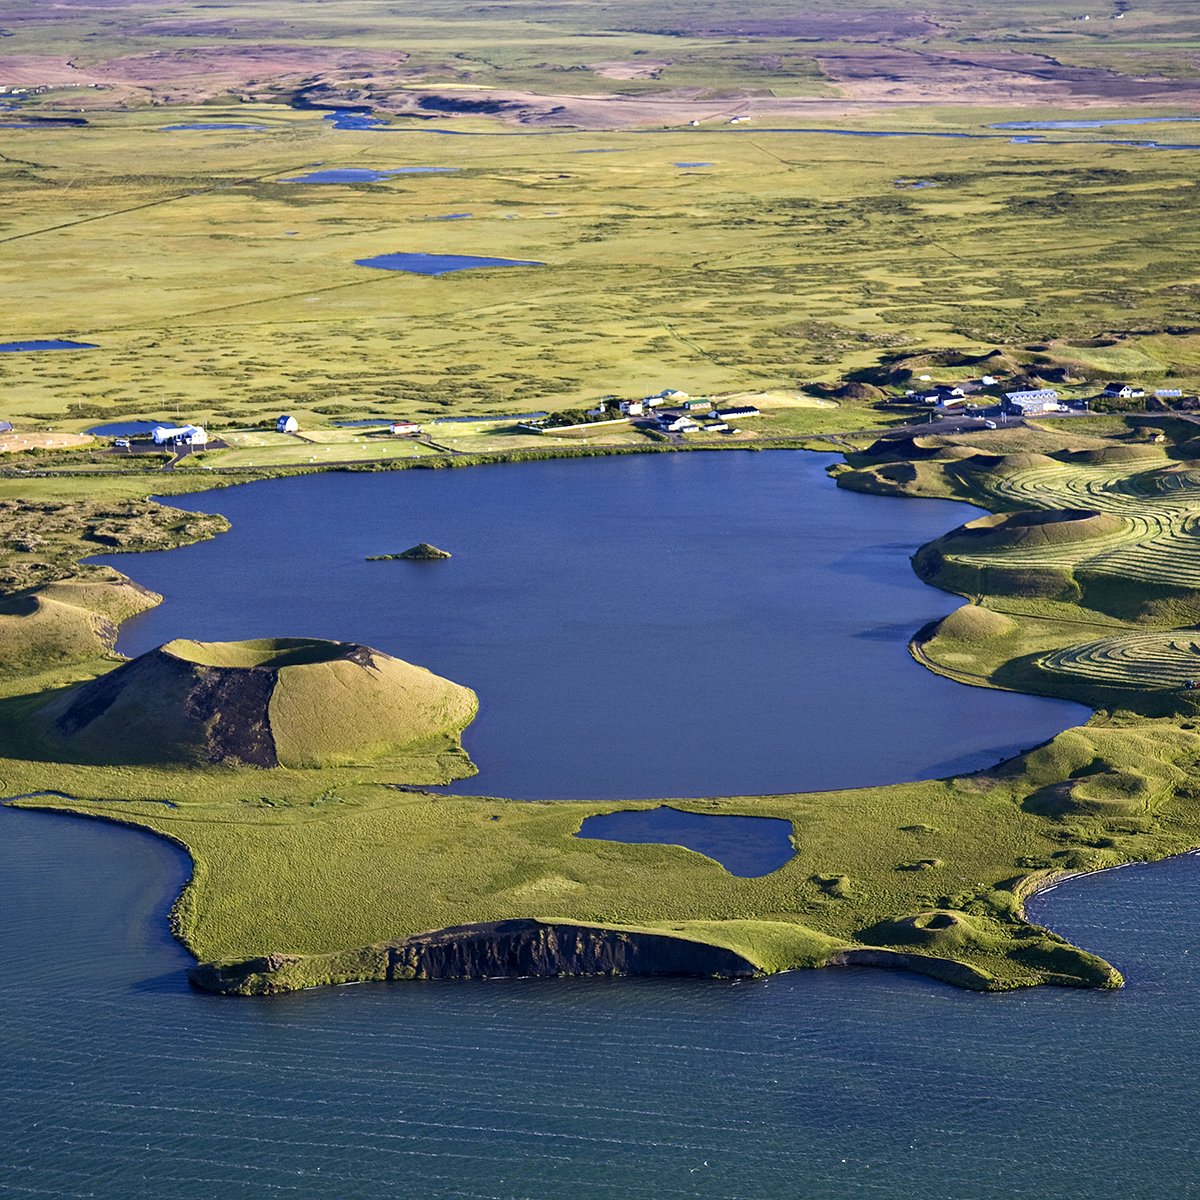 Lake Myvatn in Iceland